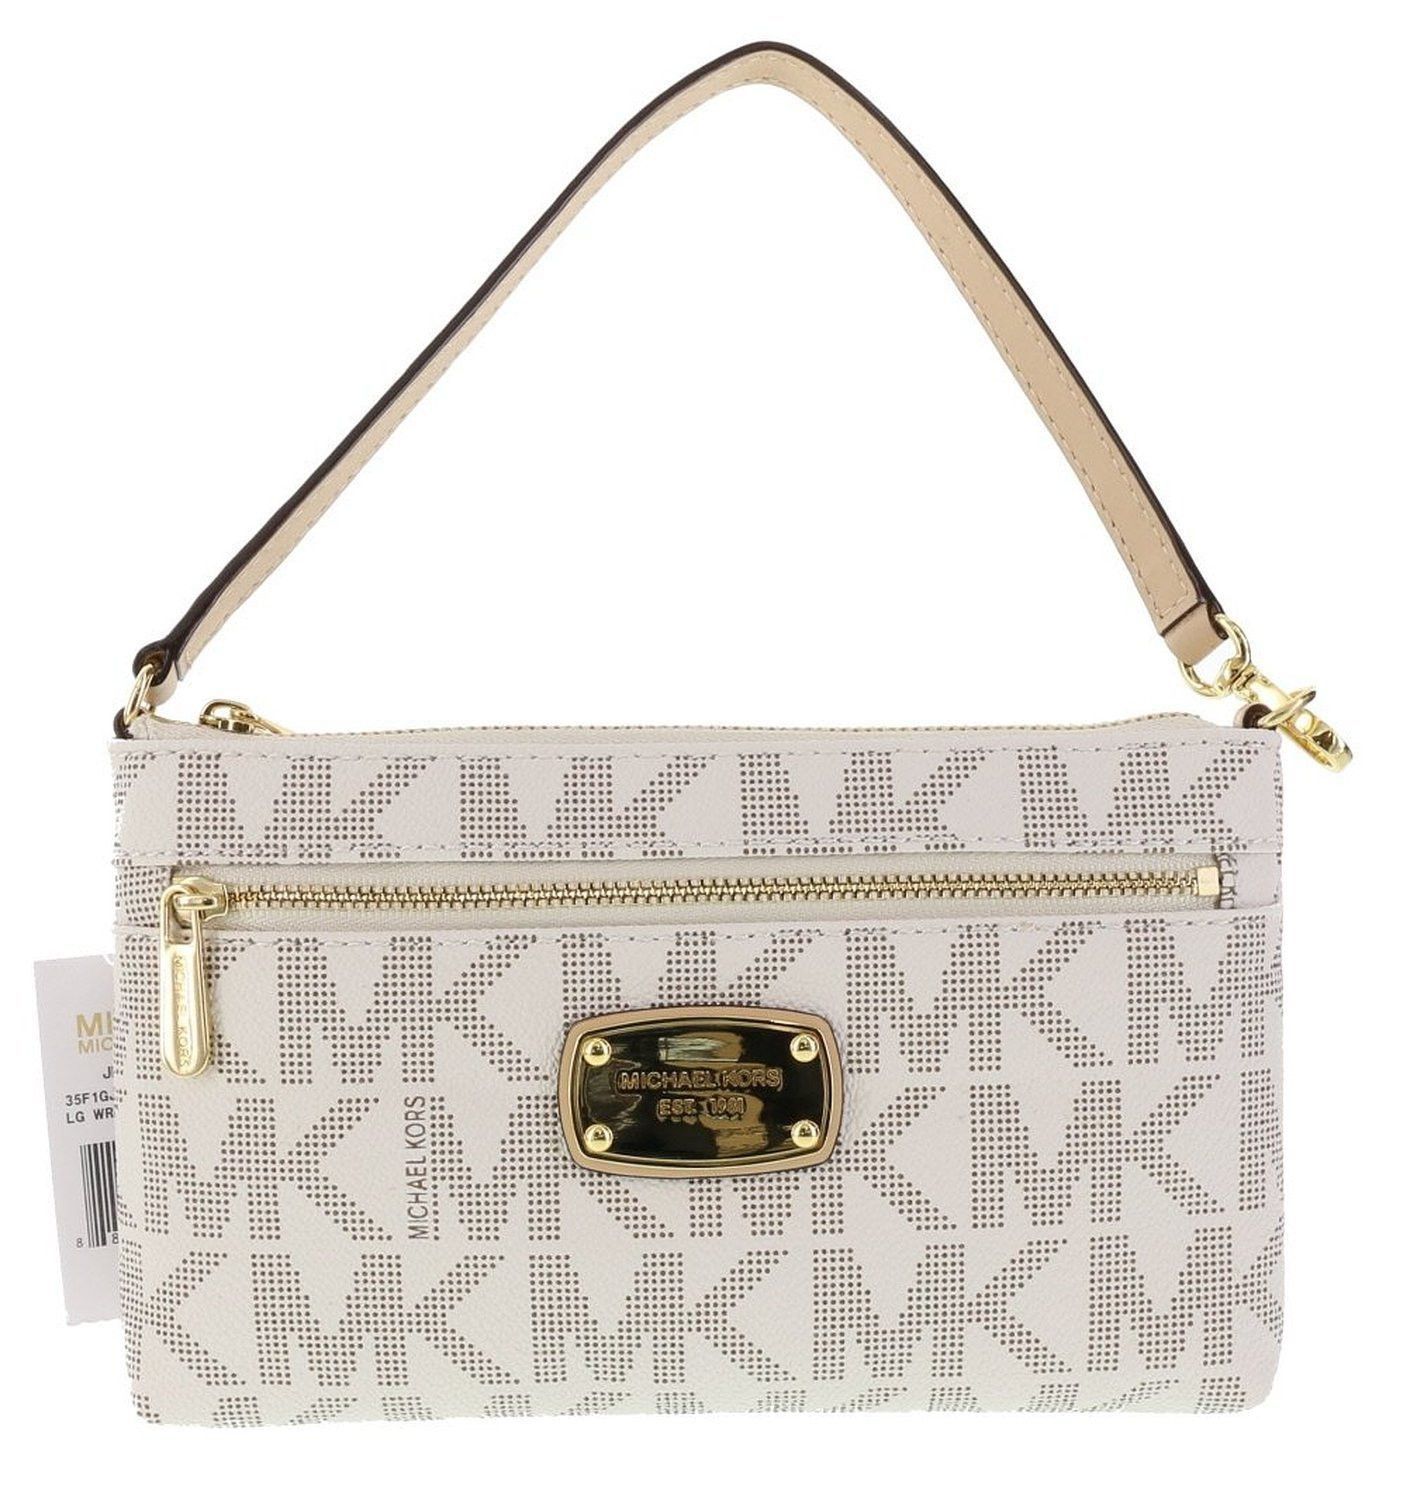 Fashion Bags -   11 makeup Logo mk handbags ideas